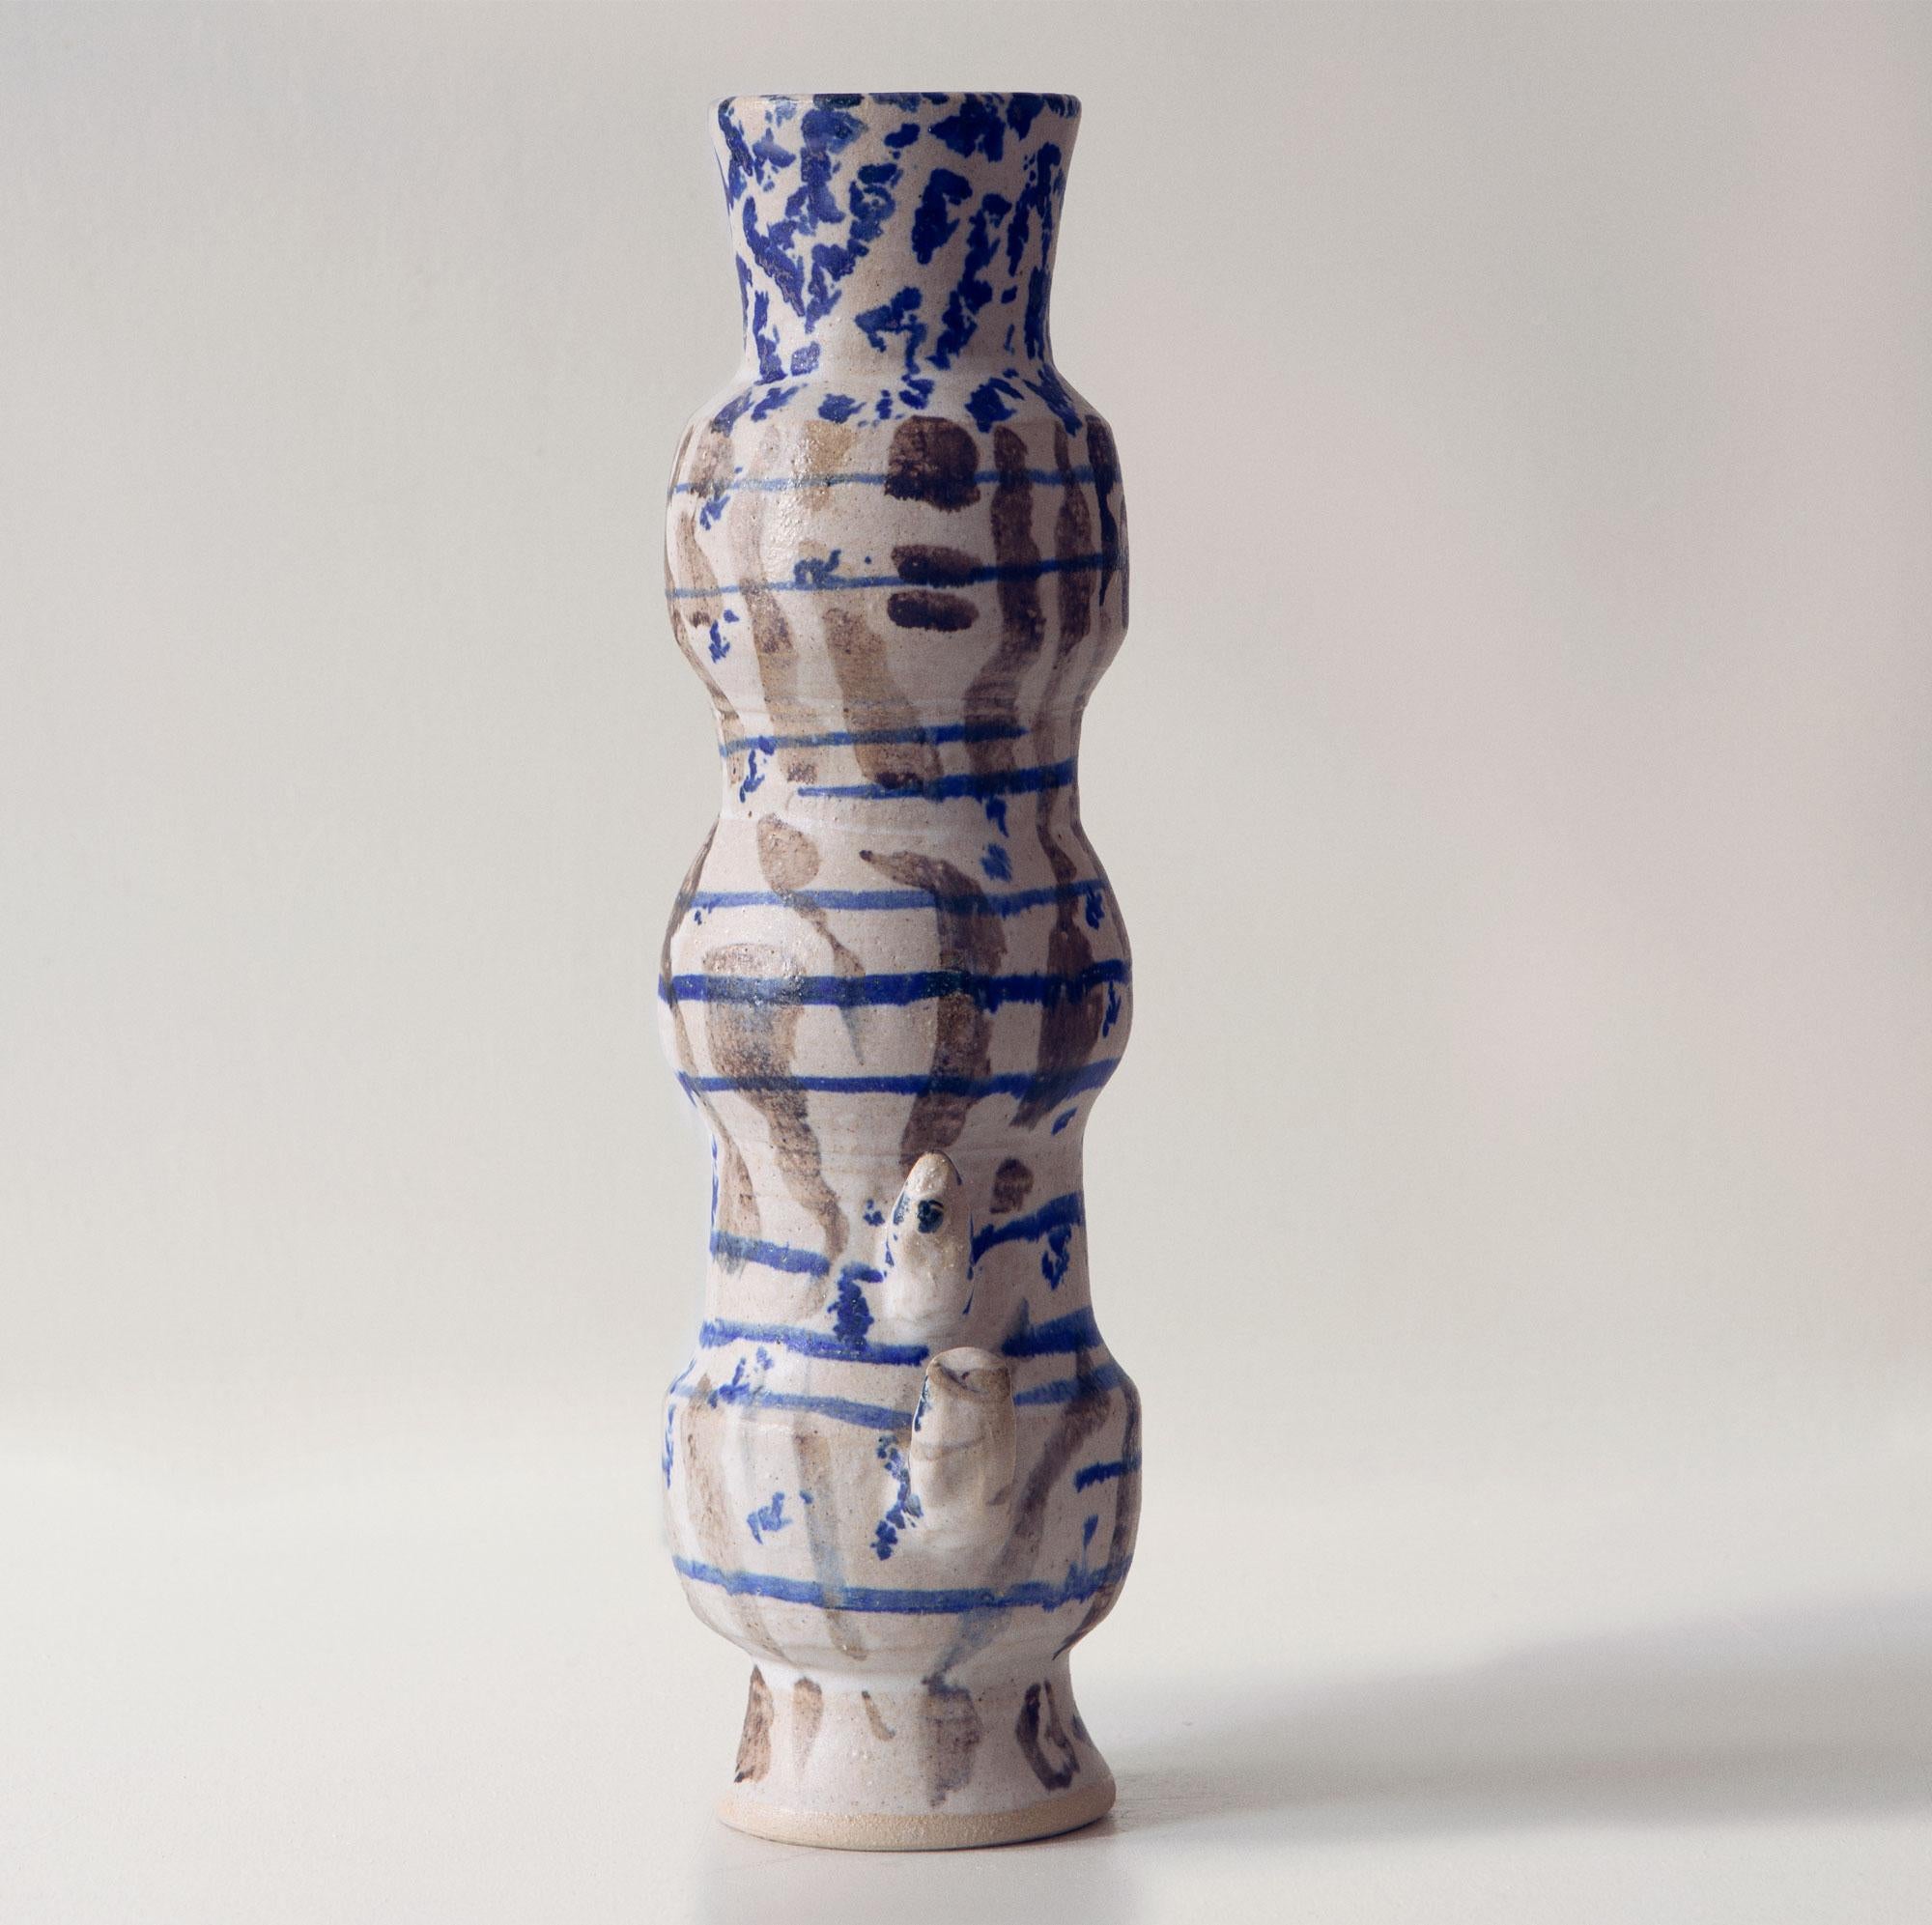 Totem Spike Tongue Vase - Modern Abstract Ornamental Ceramic Sculptural Vase - Sculpture by Dea Domus